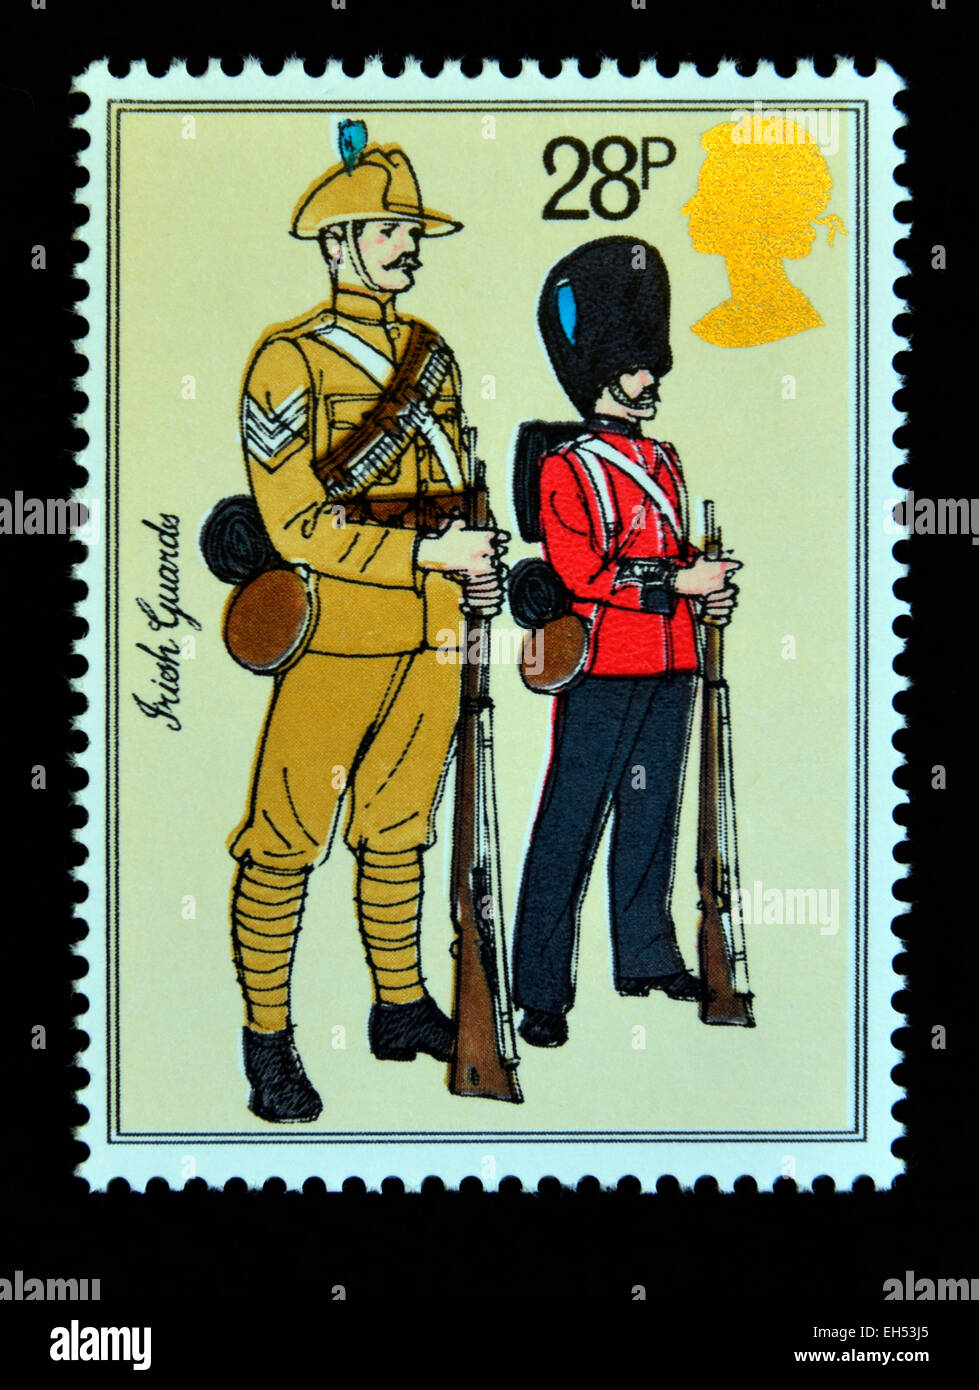 Timbre-poste. La Grande-Bretagne. La reine Elizabeth II. 1983. Uniformes de l'armée britannique. Irish Guards. 28p. Banque D'Images